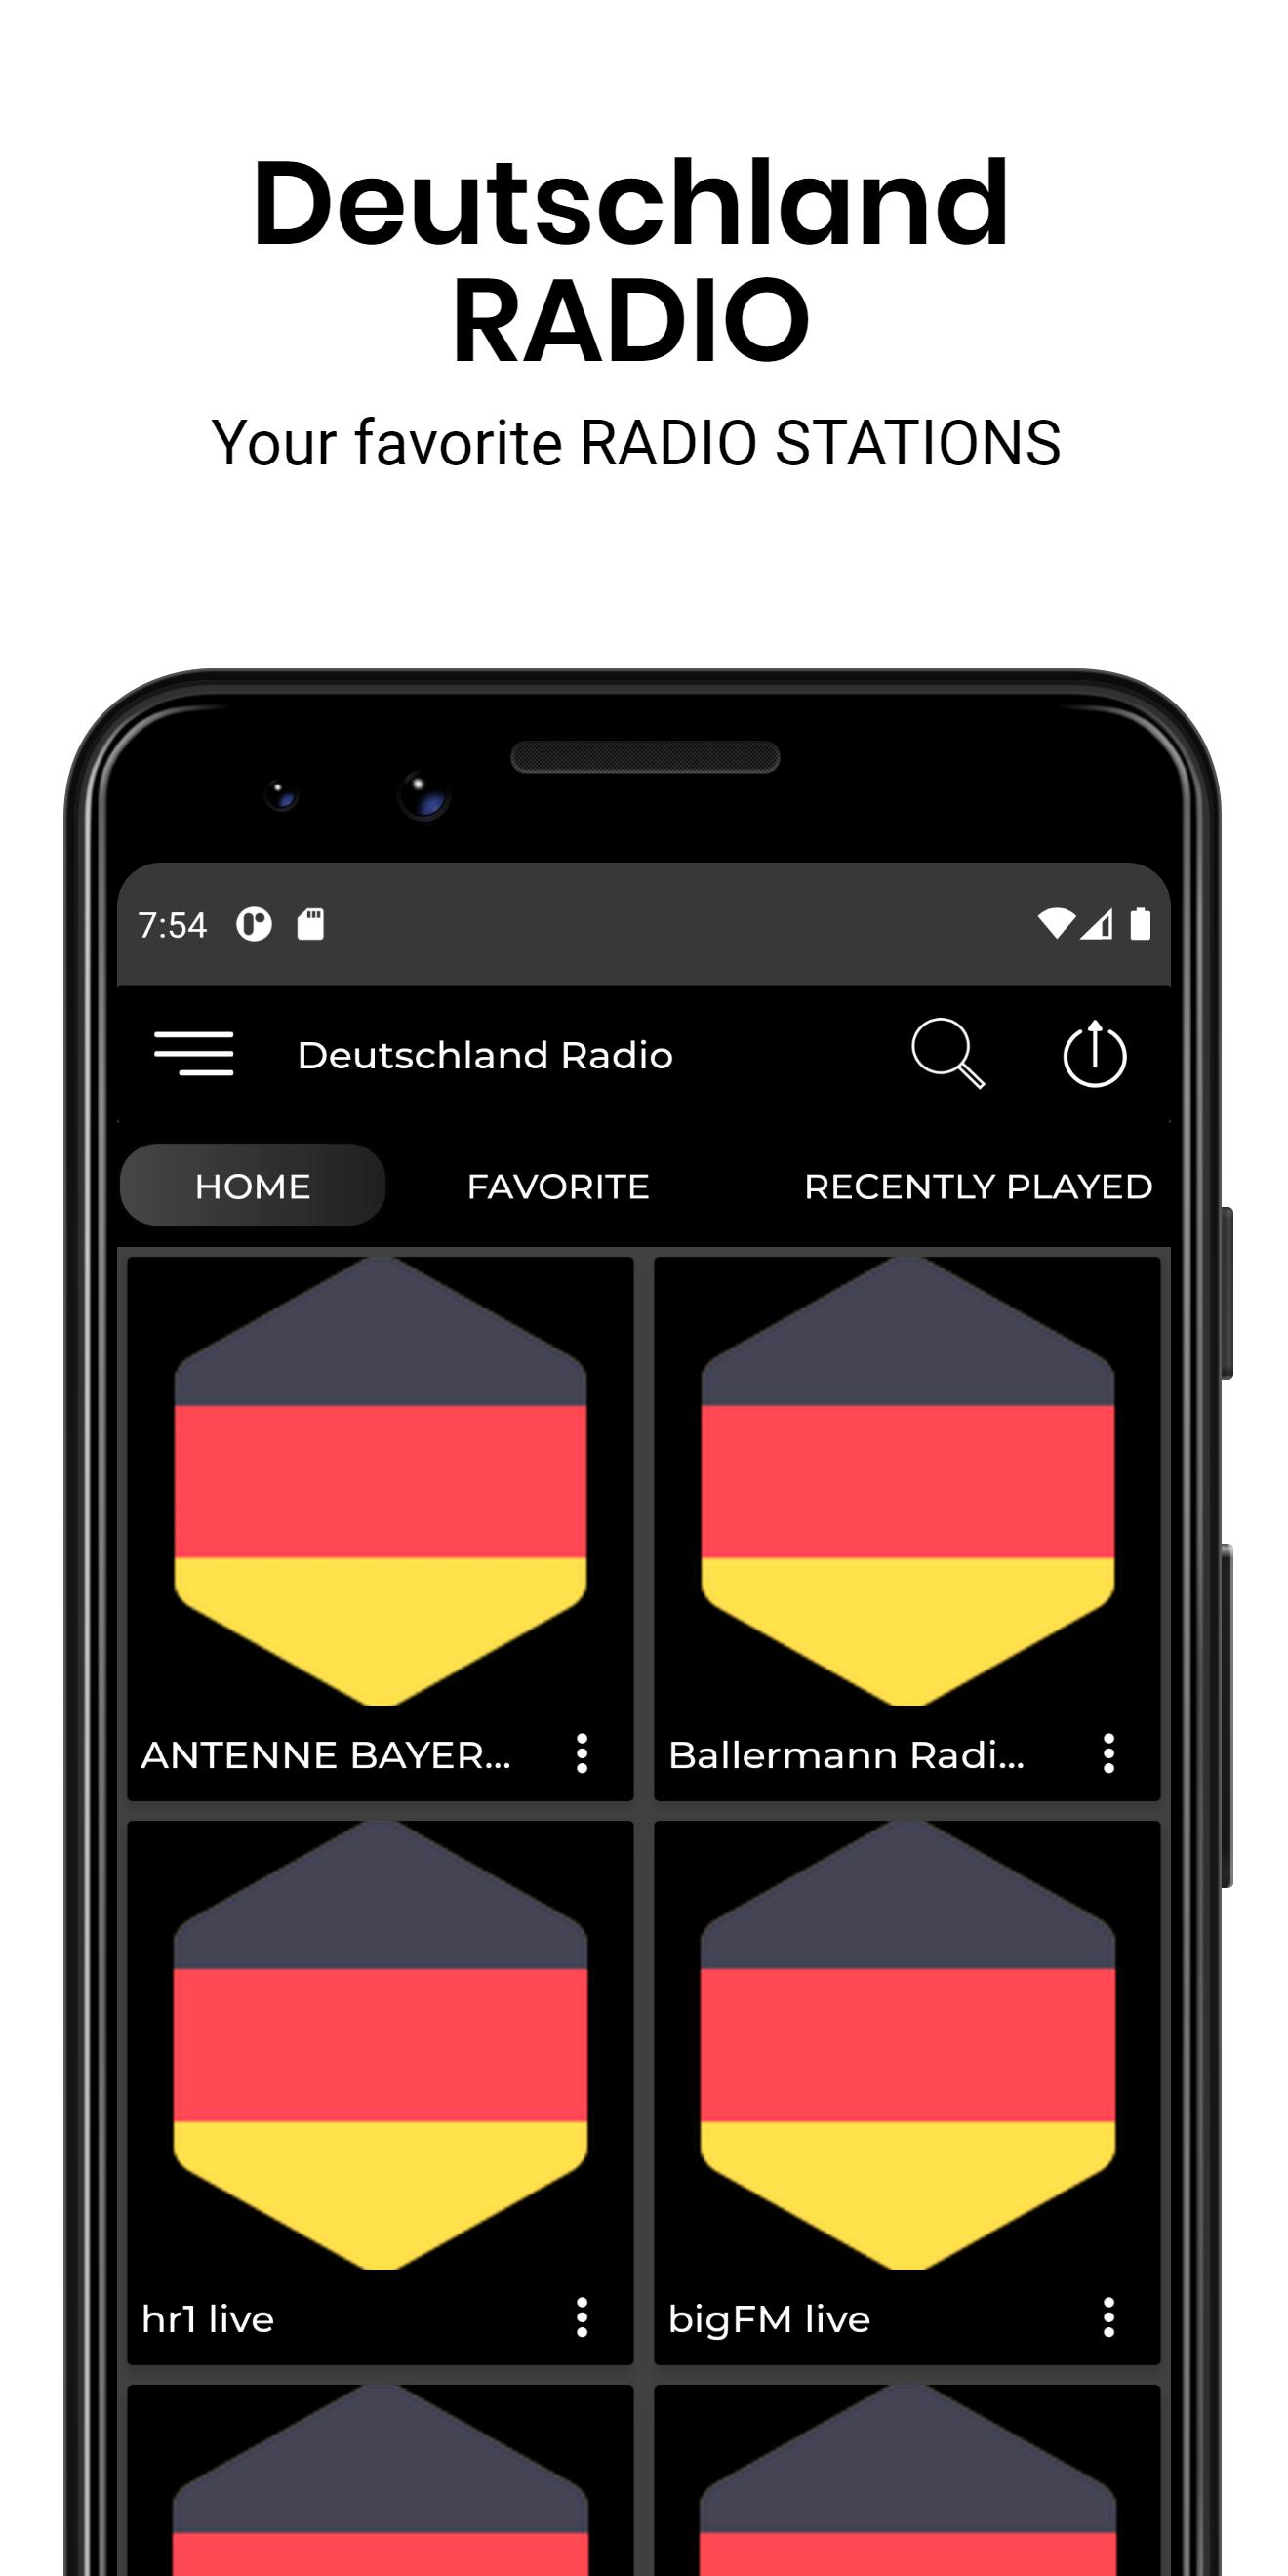 Deutschland Music Radio App DE Kostenlos Online for Android - APK Download